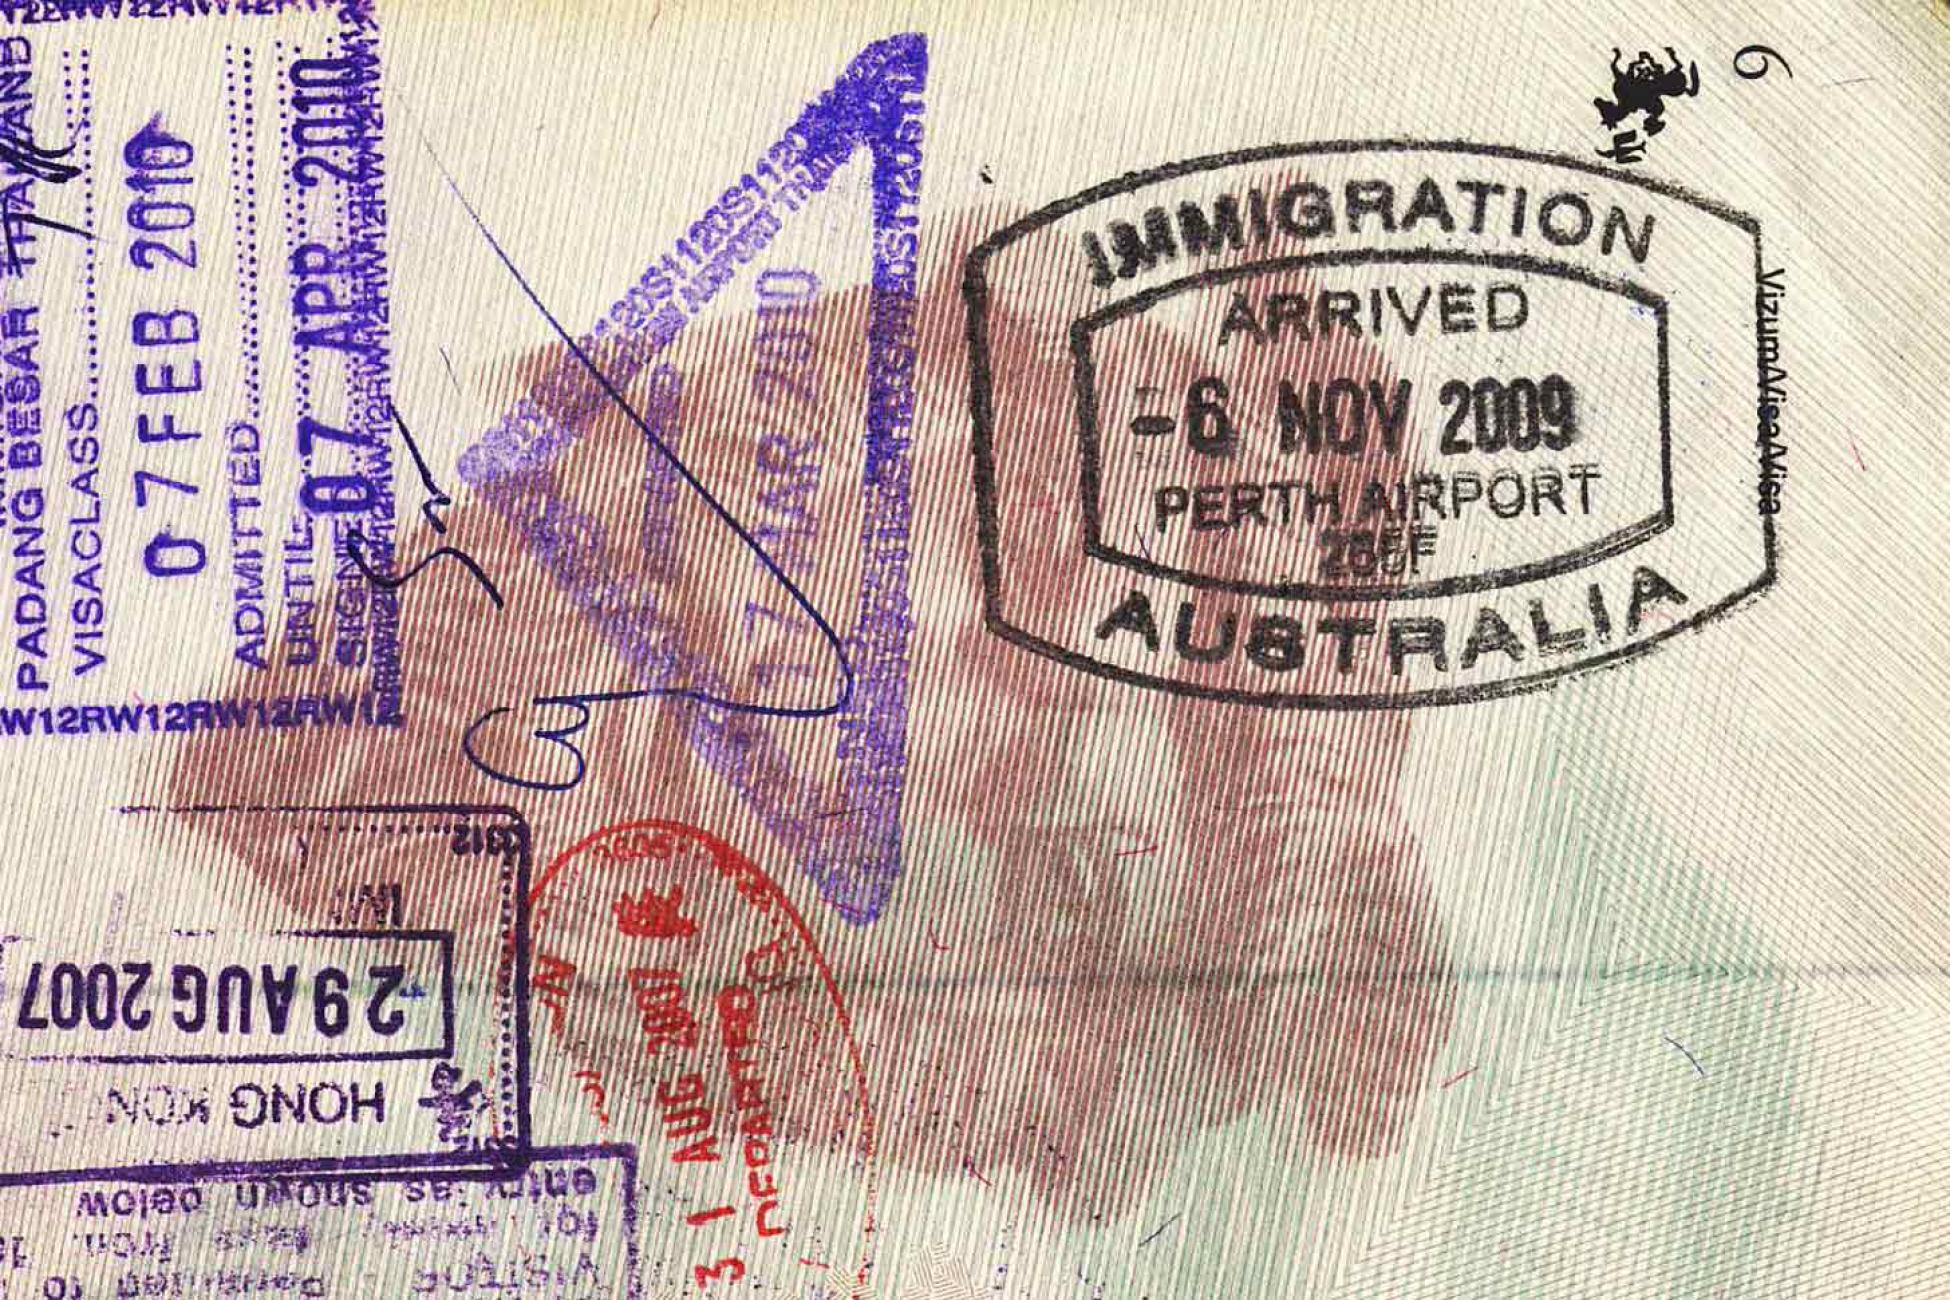 work and travel visa australia